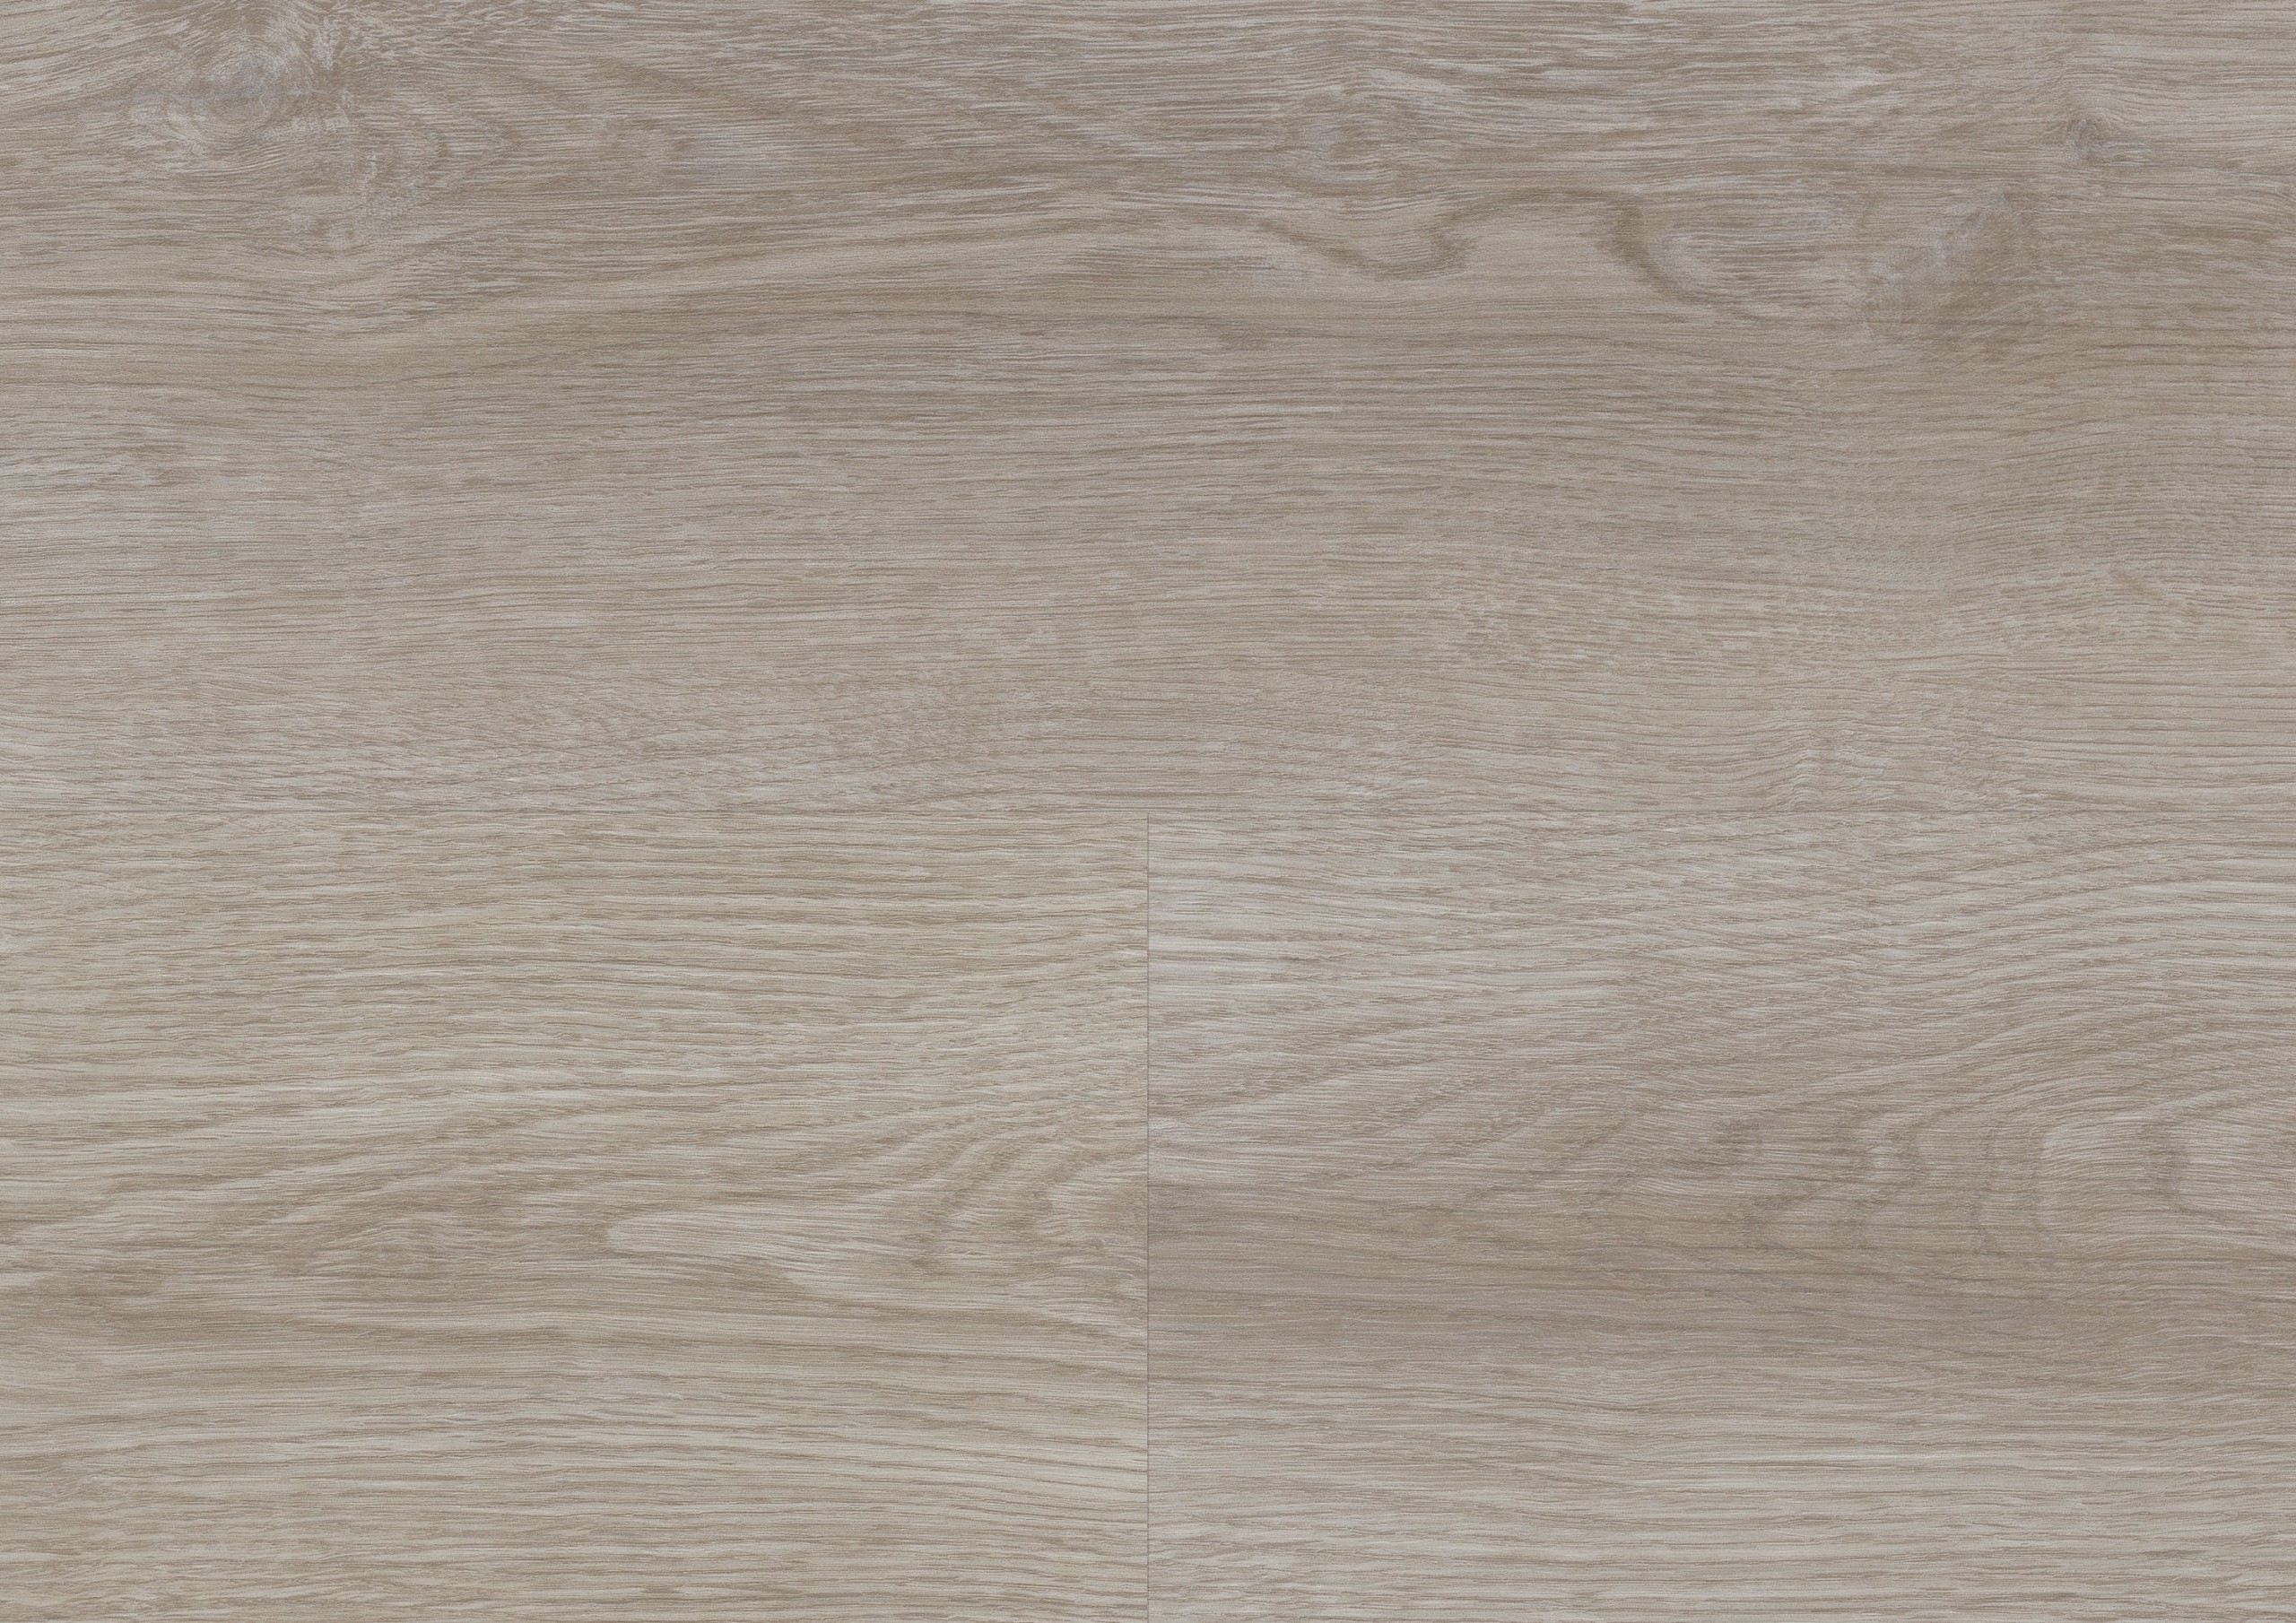 Wineo 600 wood Designboden Art. RLC187W6 Klickvinyl, Elegant Place 5 mm